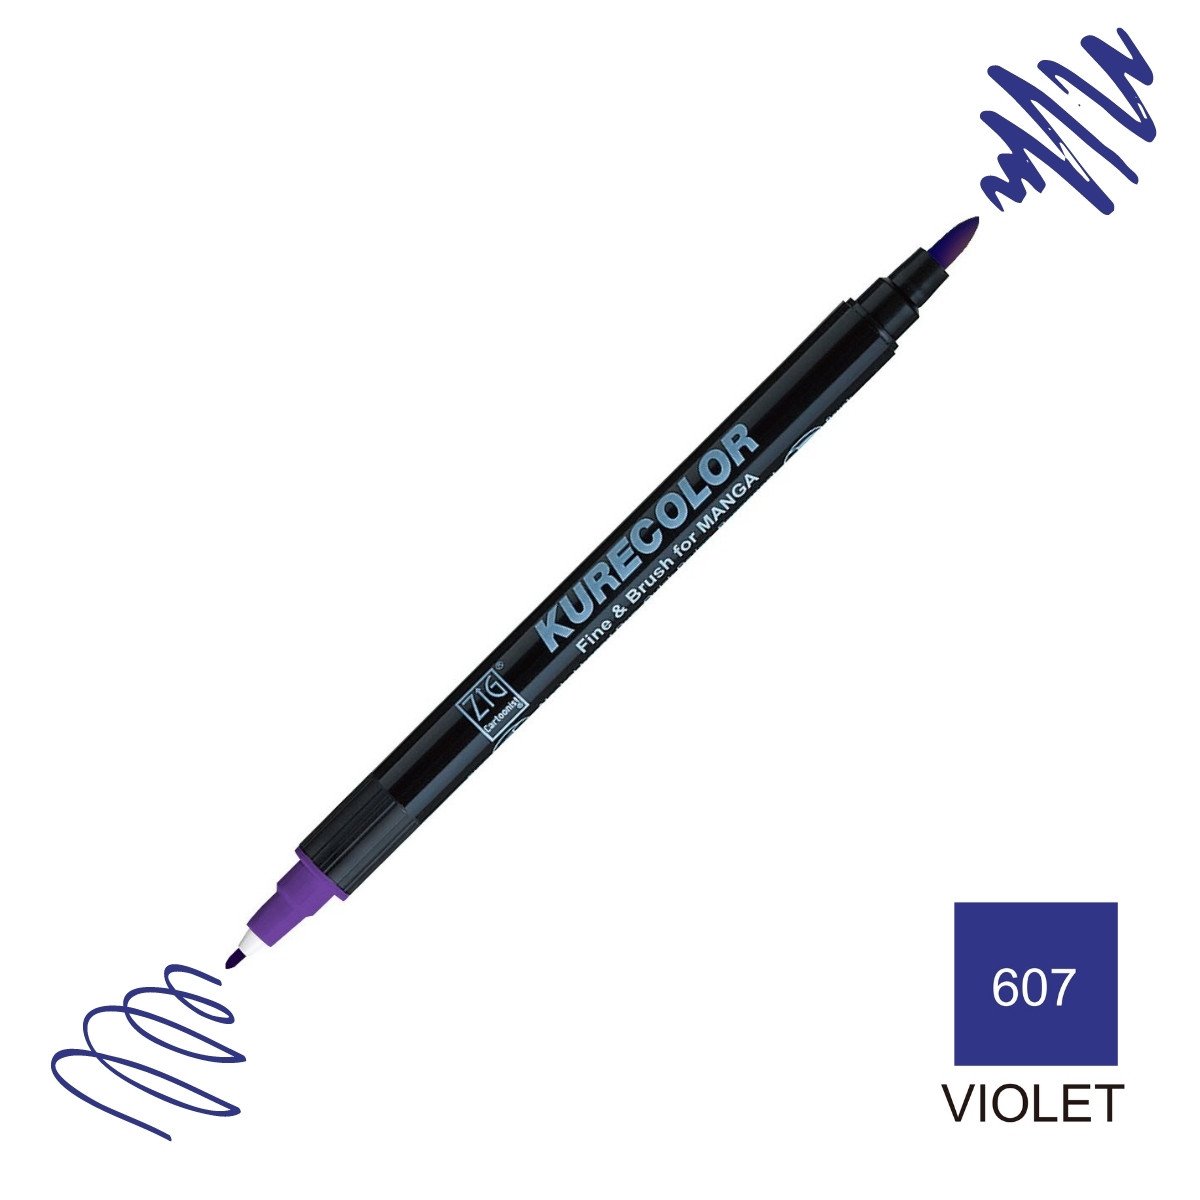 Zig Kurecolor Mangaka Fine&Brush Çift Taraflı Kalem CNKC-2200 No 607 Violet